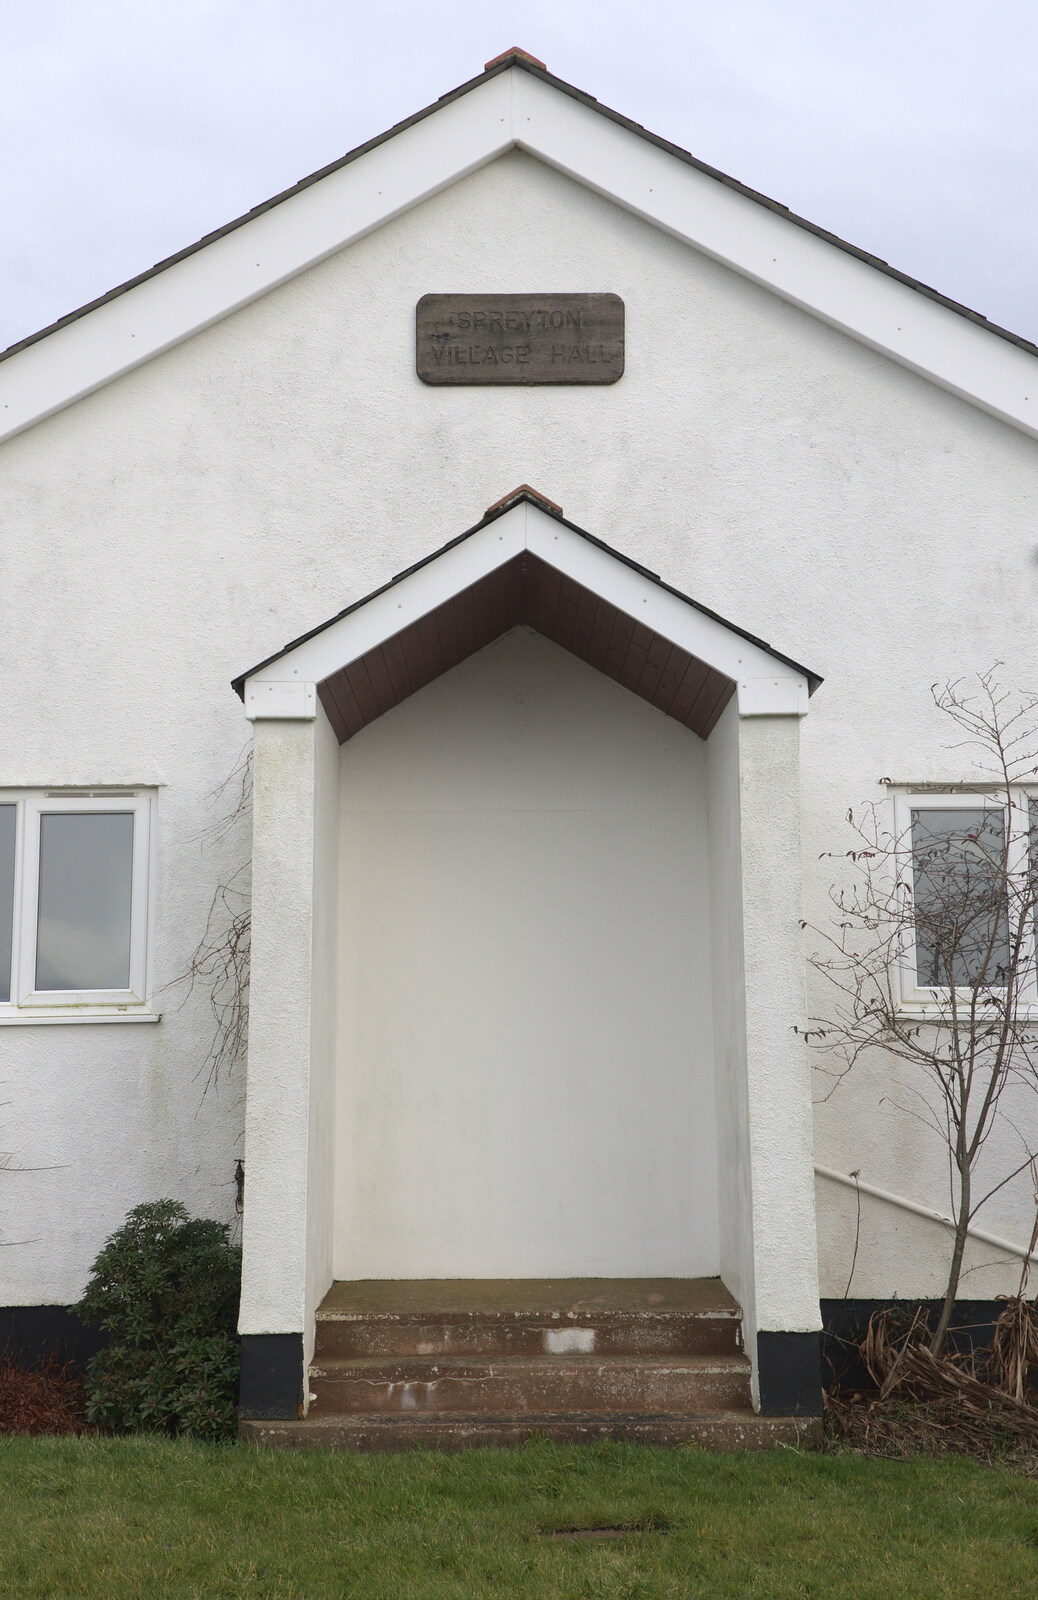 Spreyton Village Hall's pointless entrance porch from A Trip to Grandma J's, Spreyton, Devon - 18th February 2015